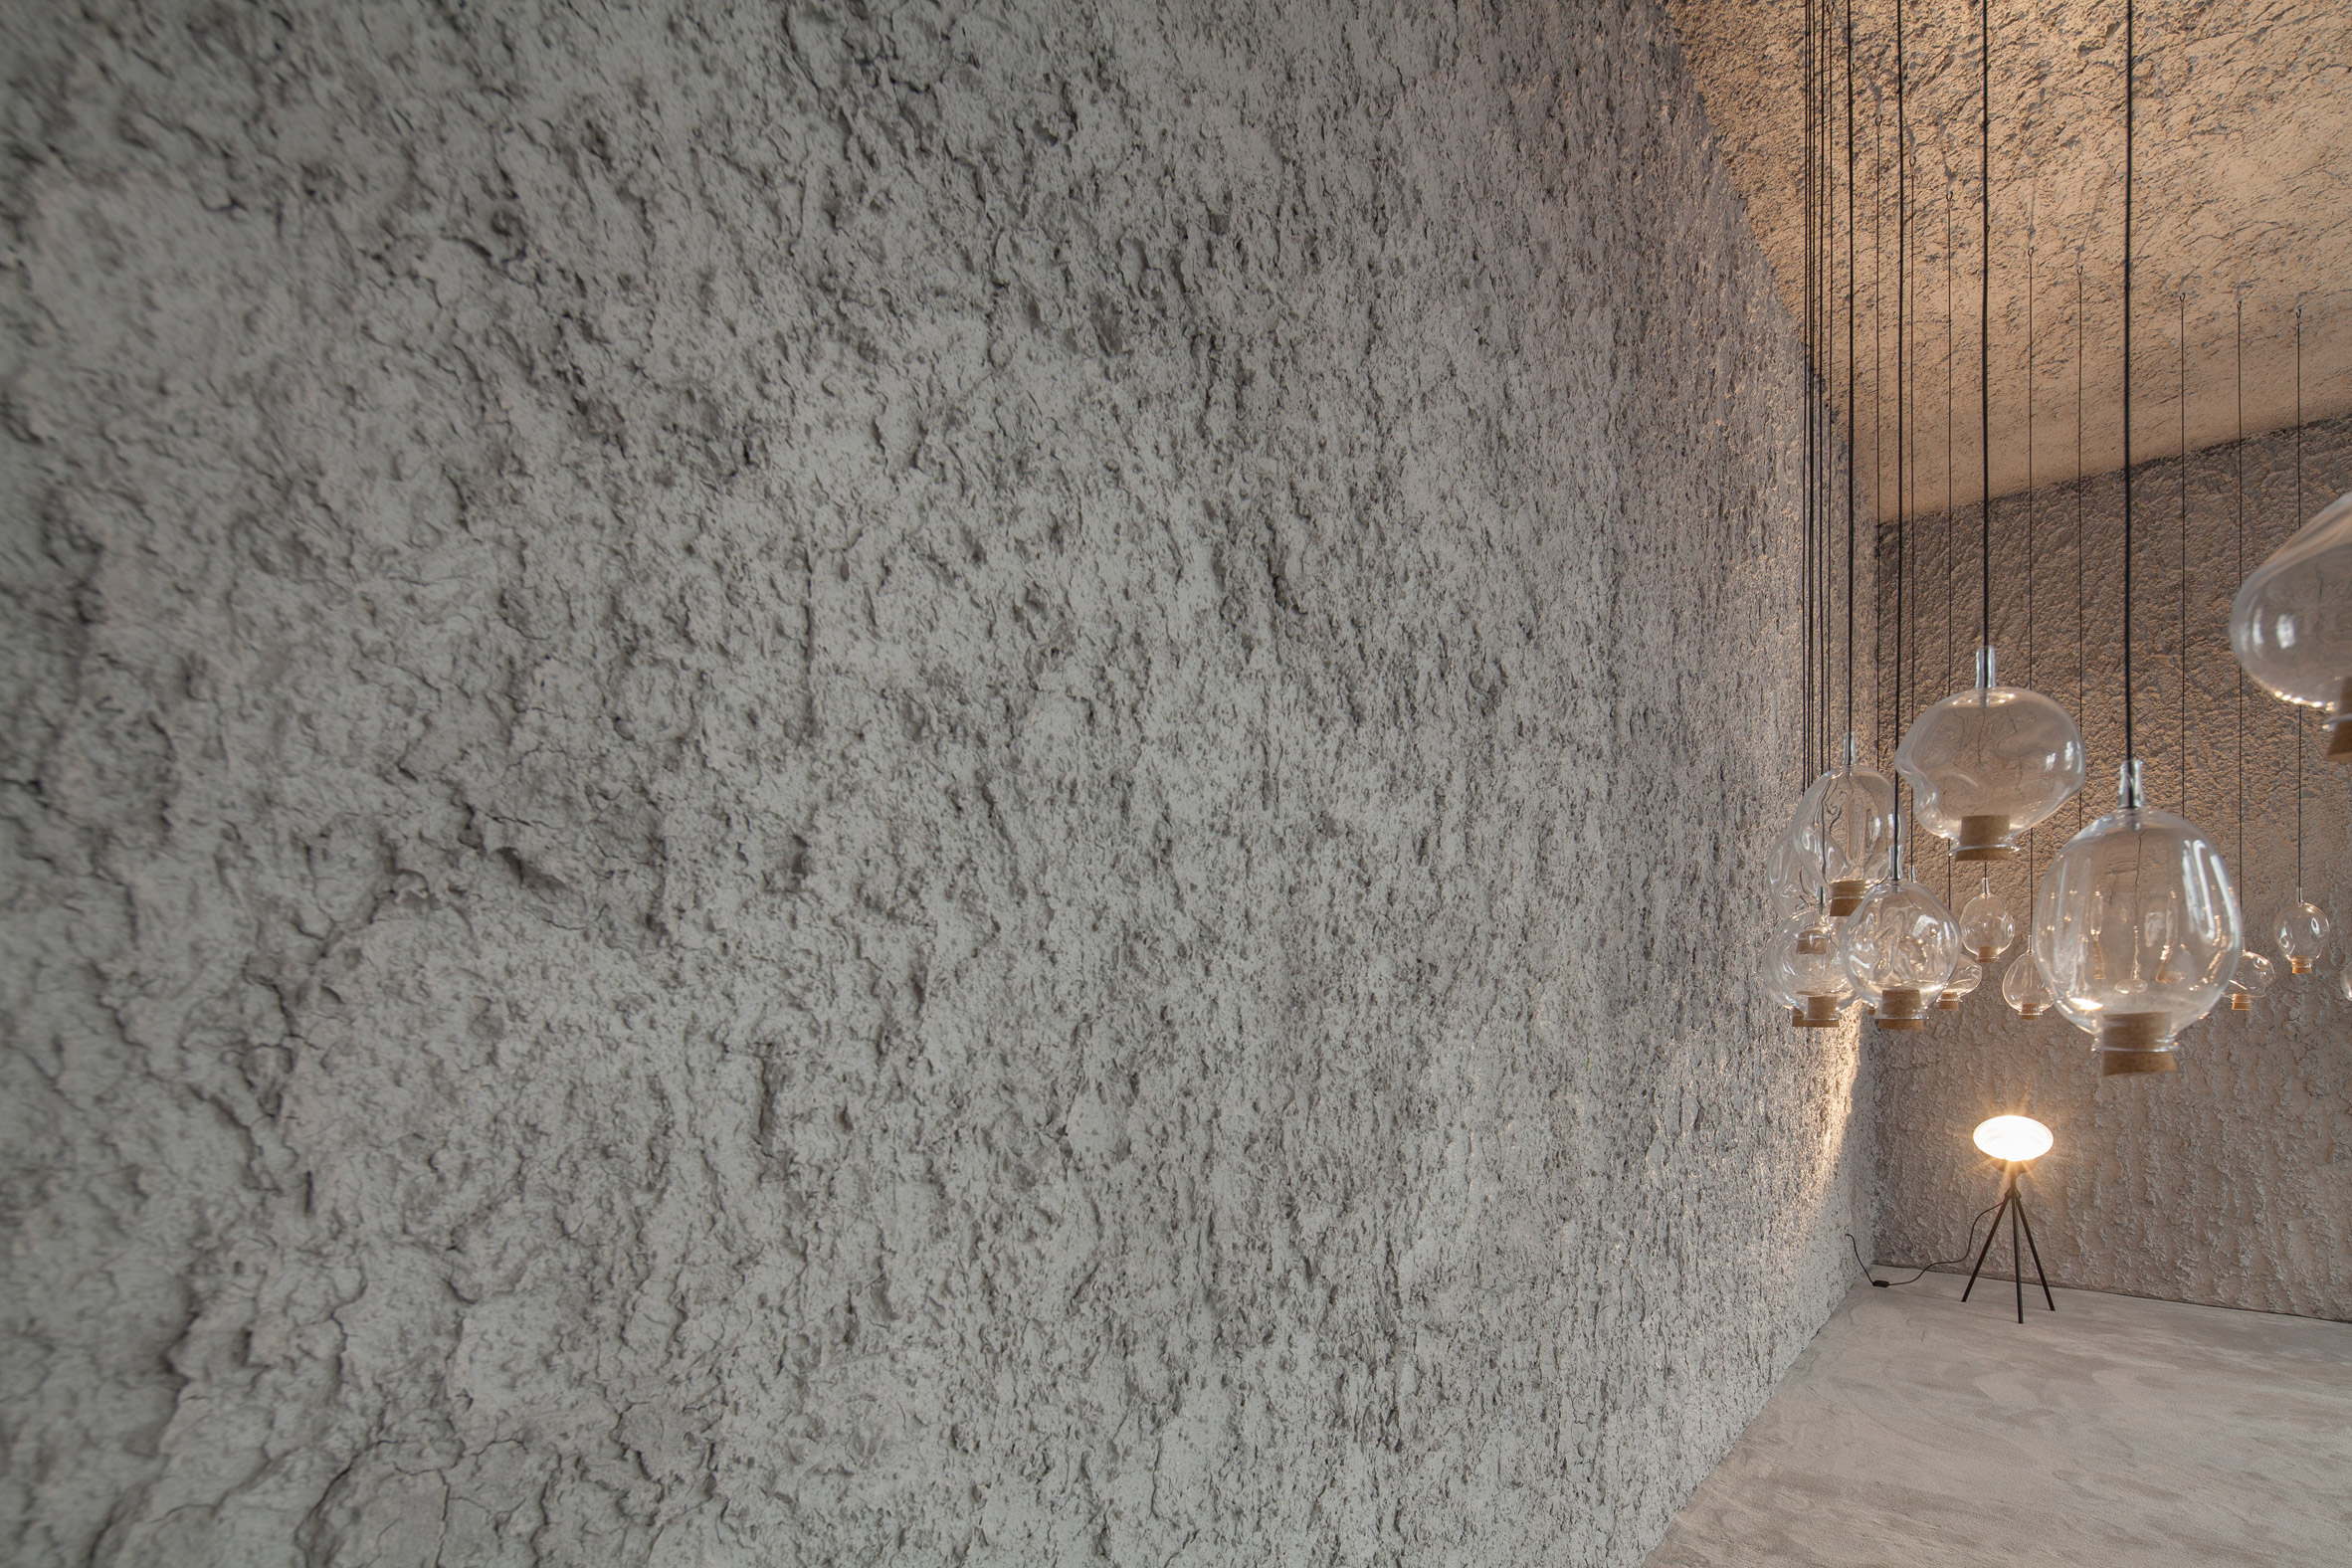 antonino-cardillo-pics-house-of-dust-and-illuminum-gallery-architecture_dezeen_2364_col_3